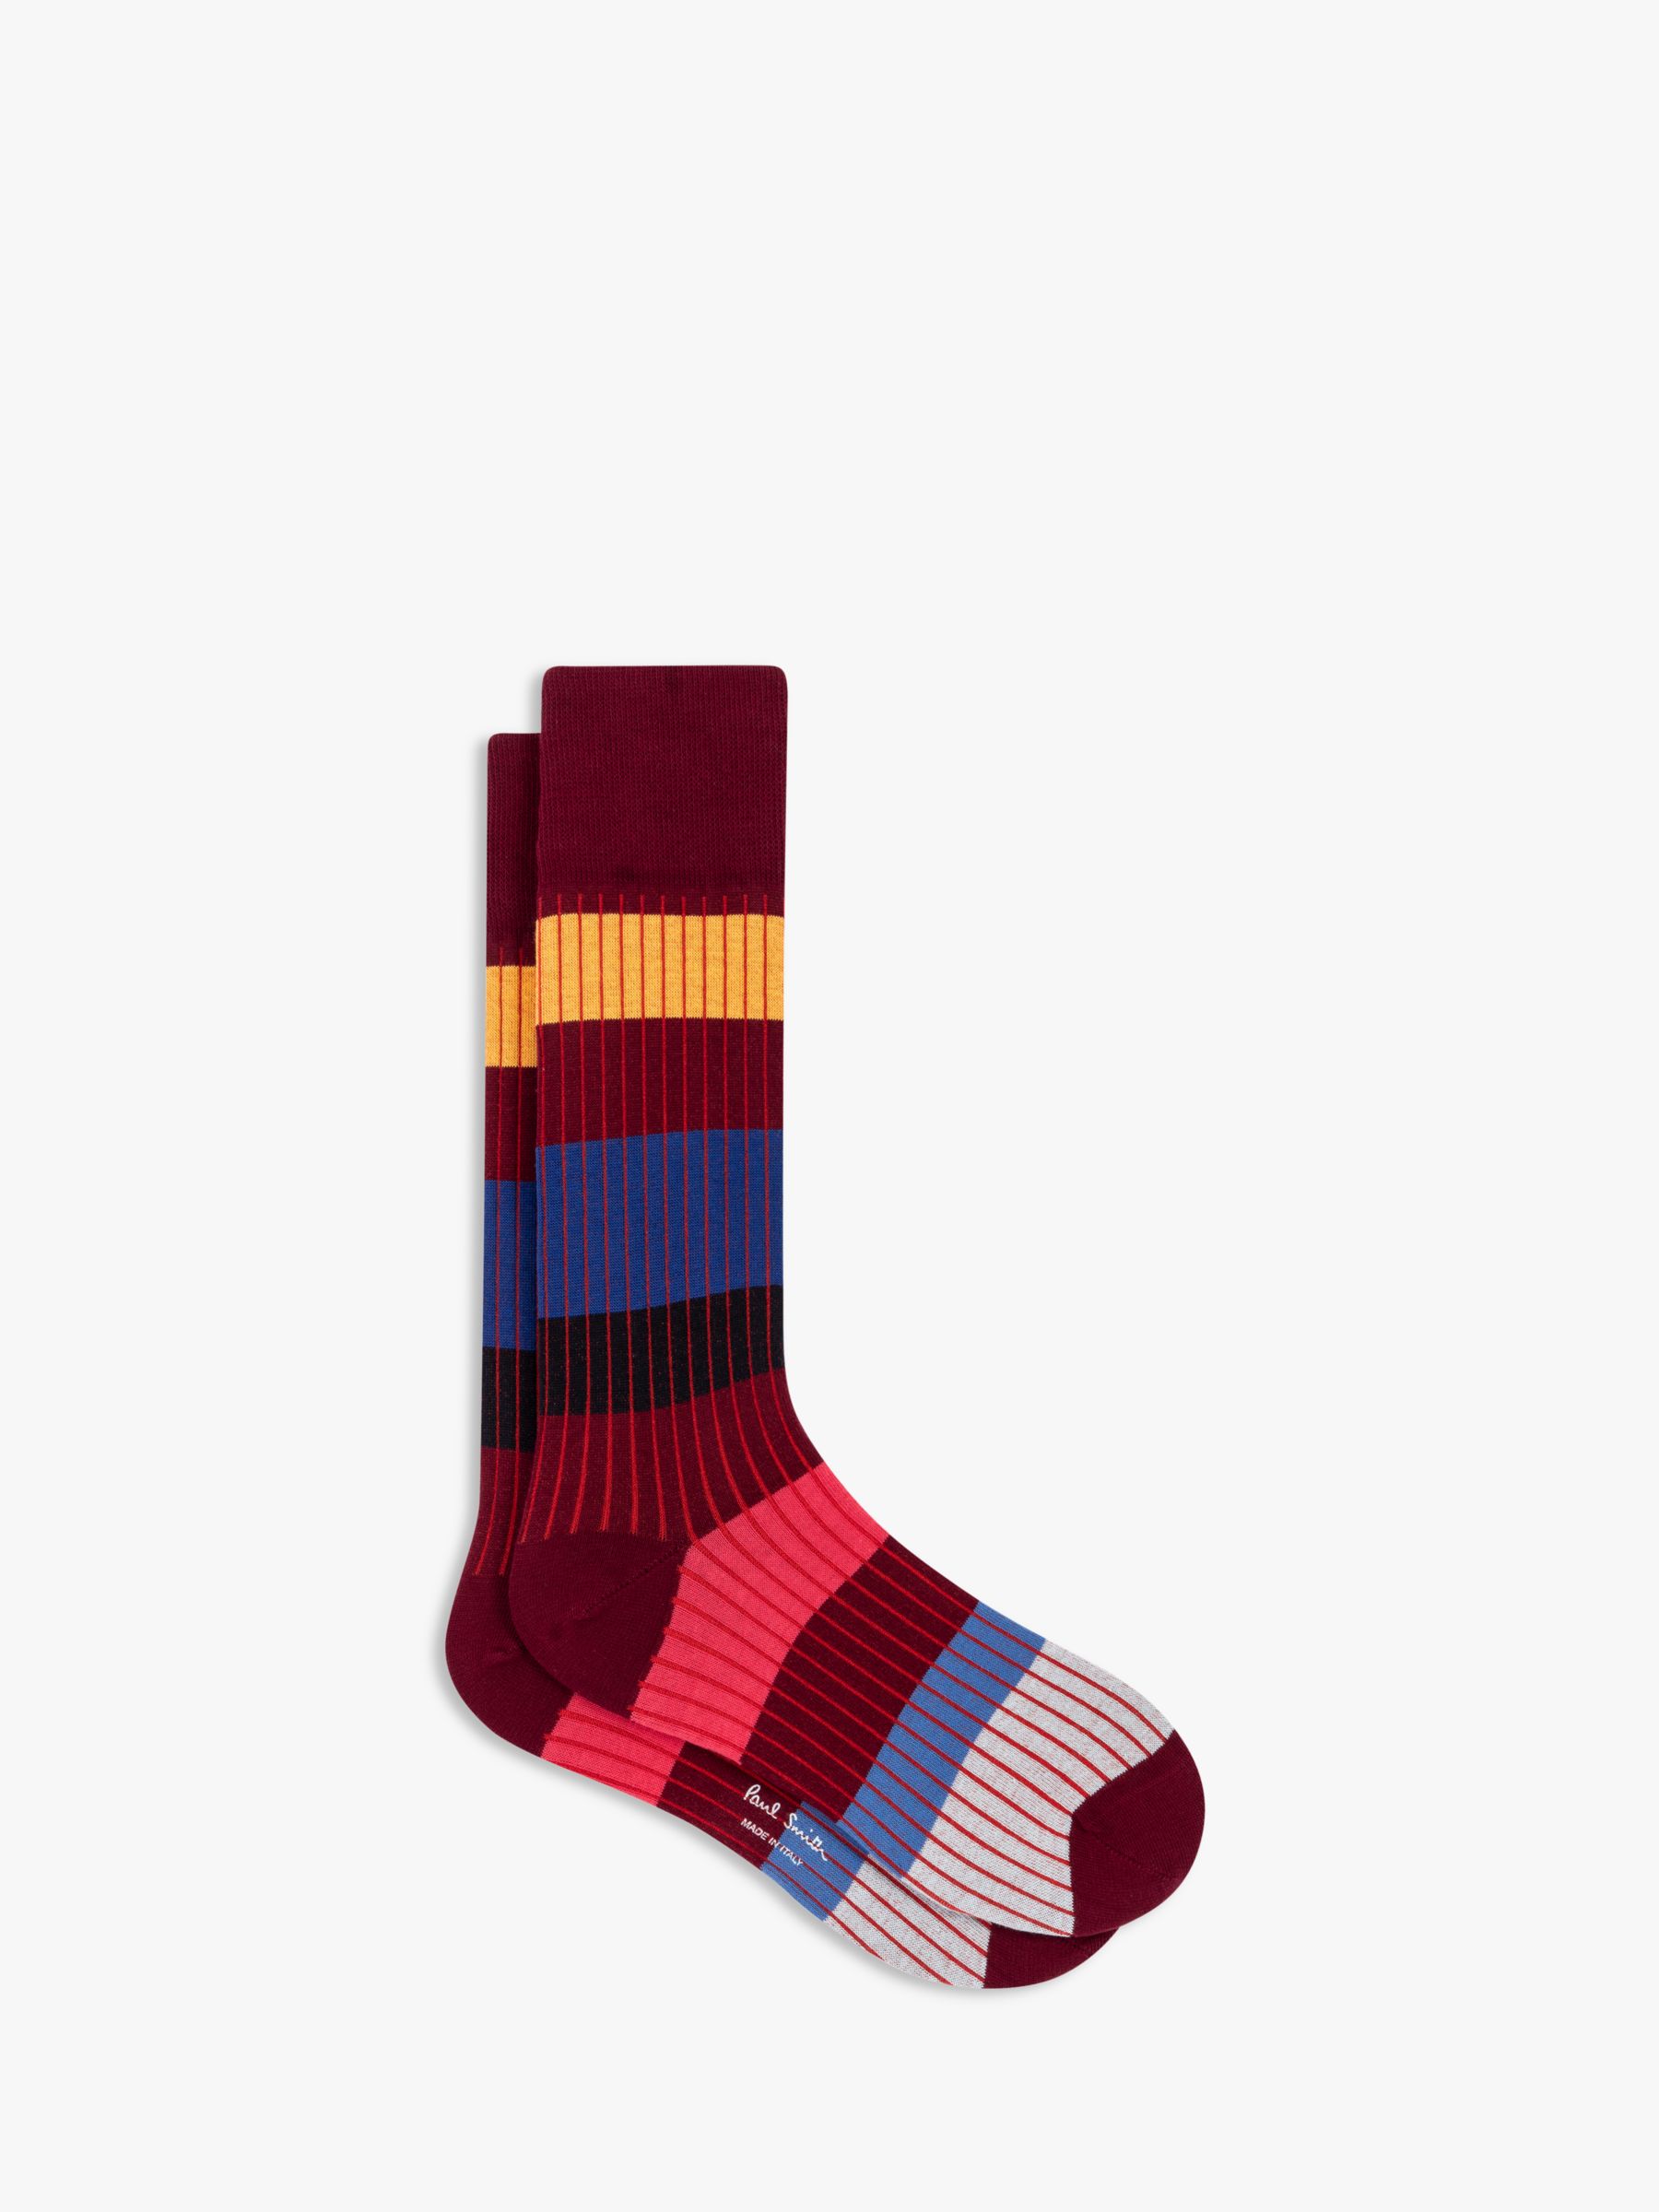 Paul Smith Errol Stripe Socks, Burgundy/Multi